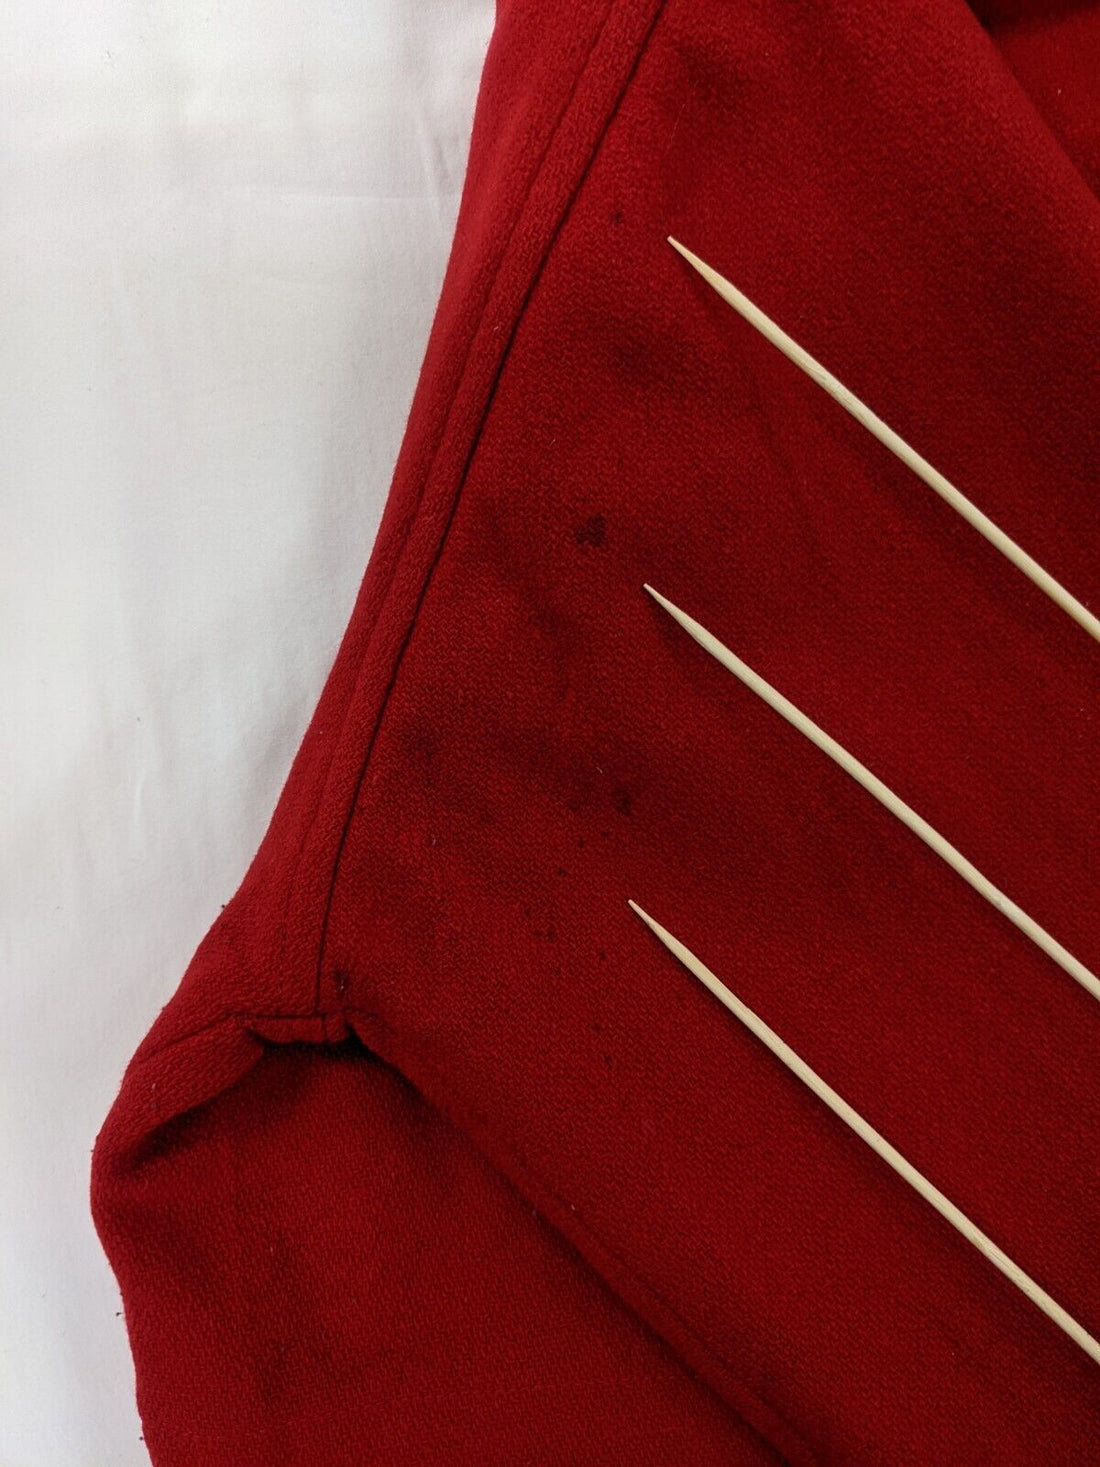 Vintage Johnson Woolen Mills Wool Coat Jacket Sz Large Red Made USA Plaid Lined